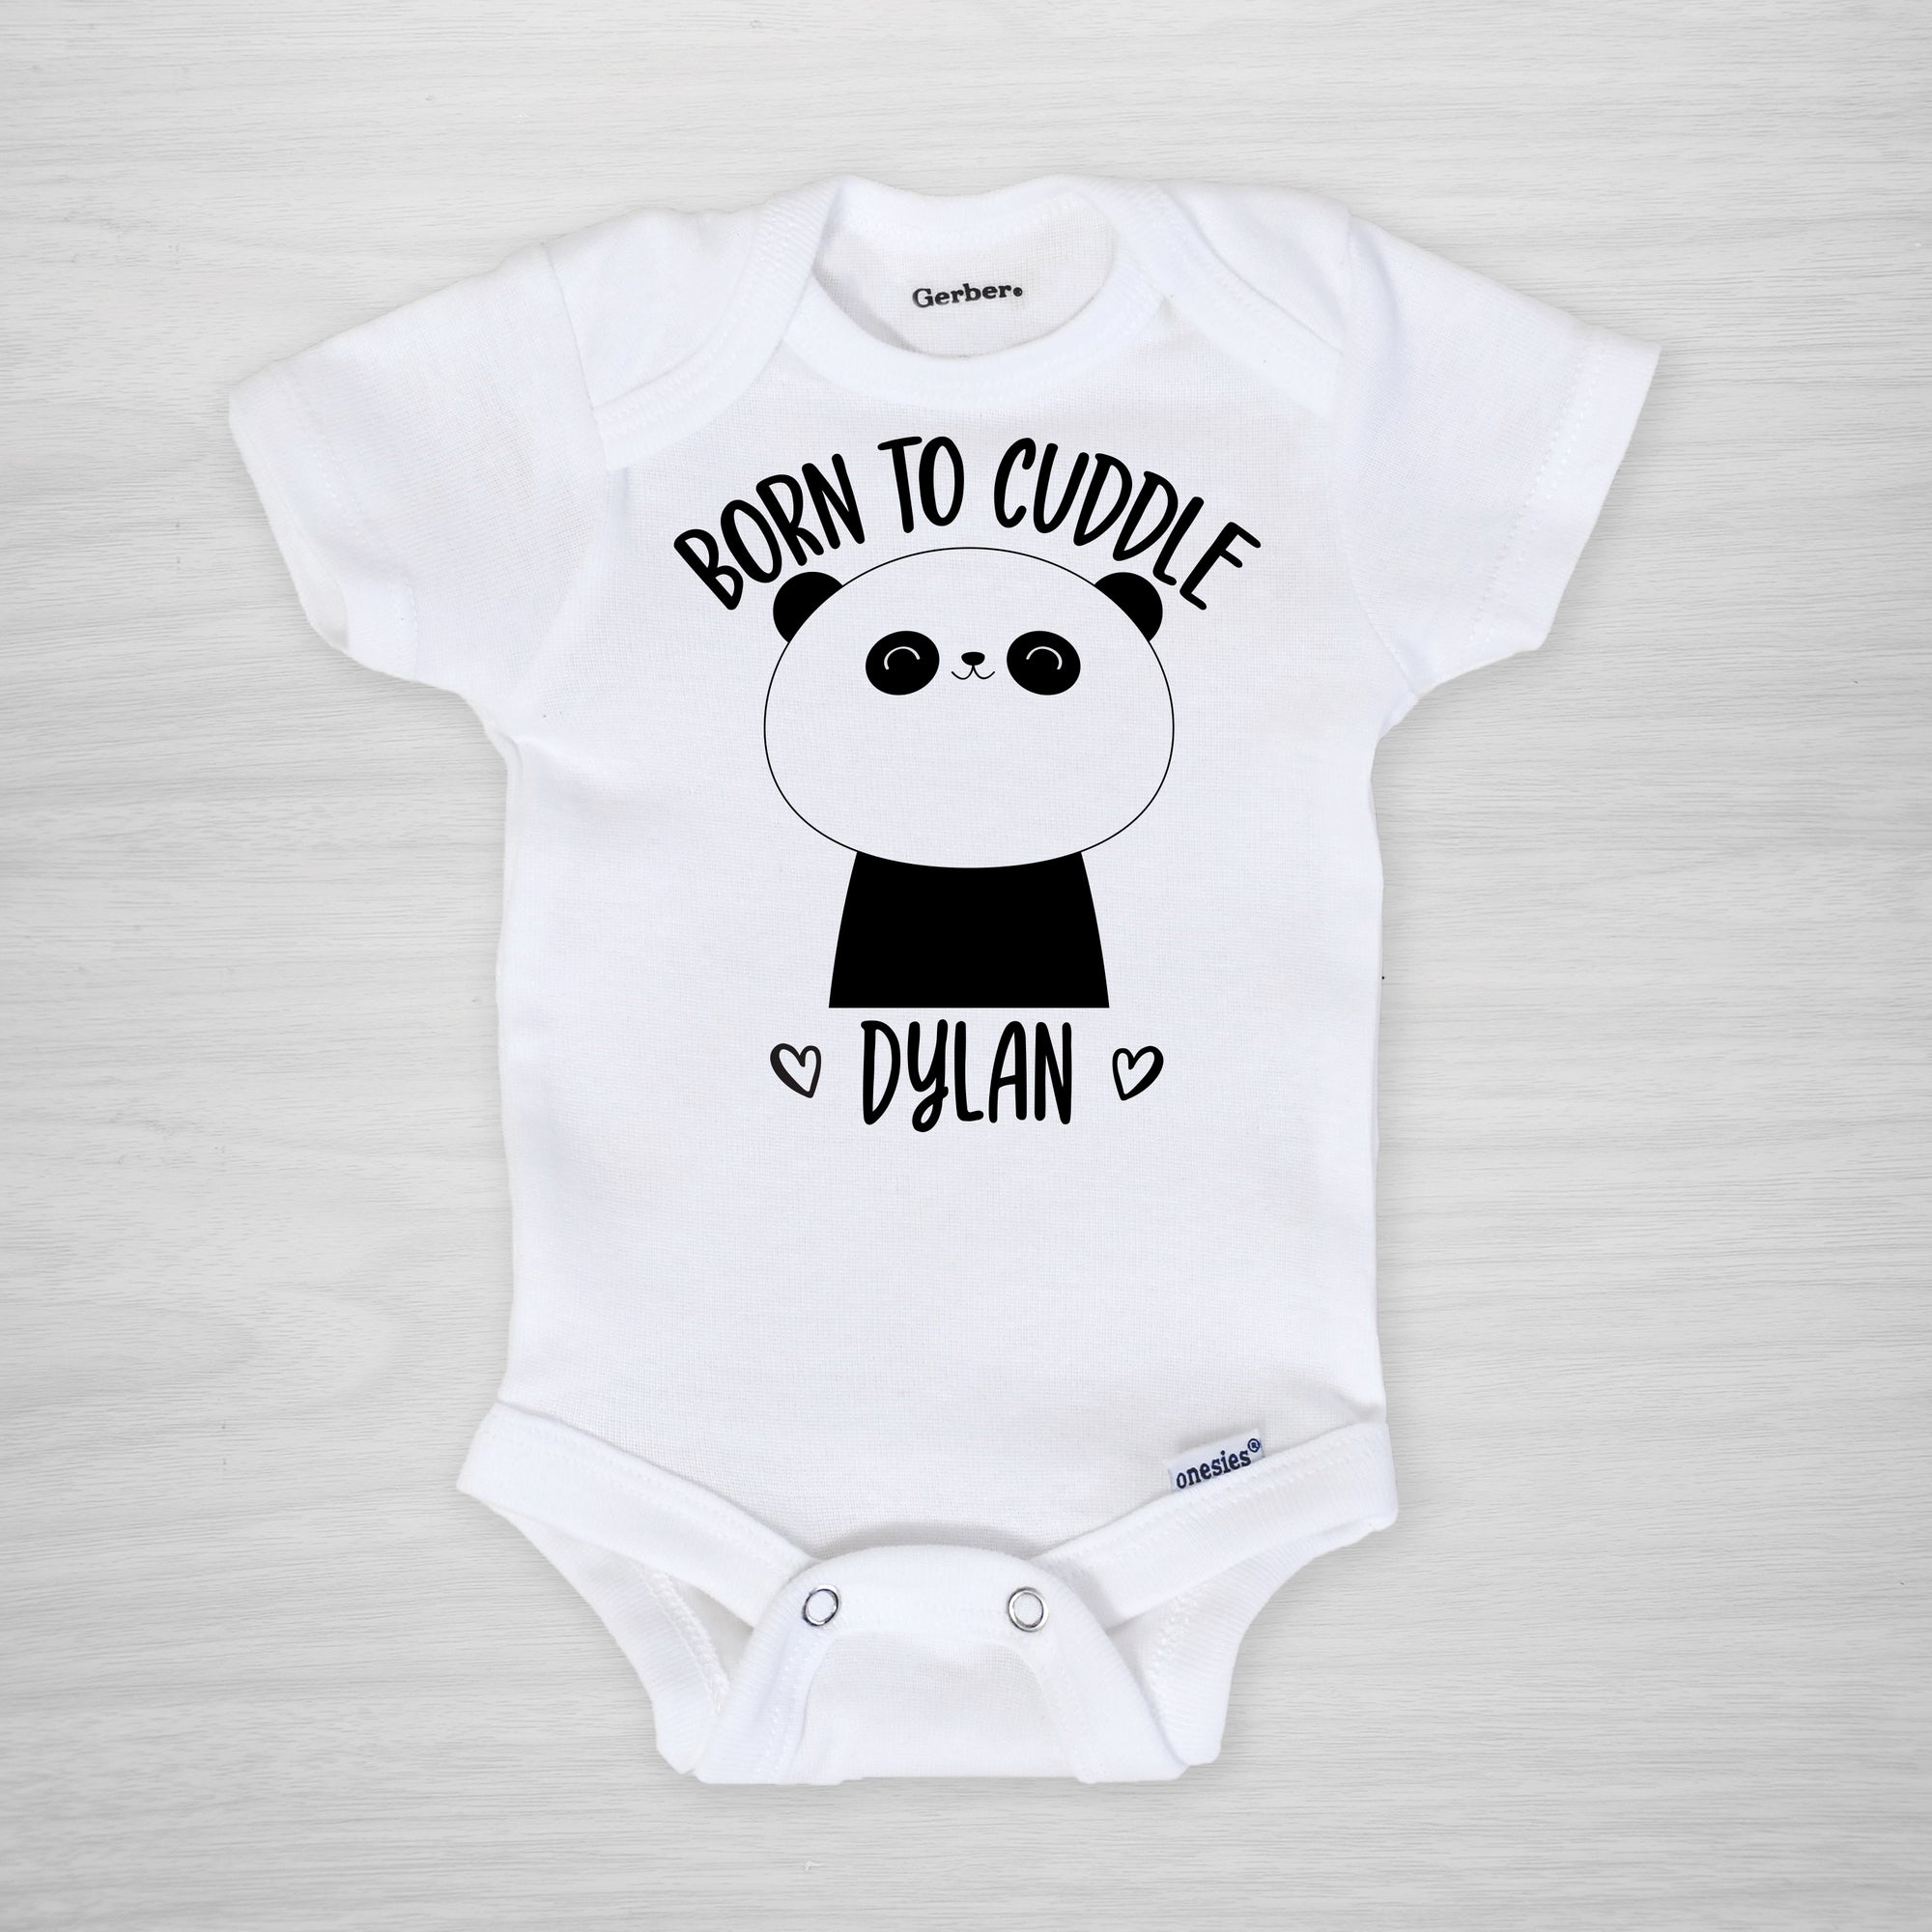 Panda Gerber Onesie "Born to Cuddle" short sleeved